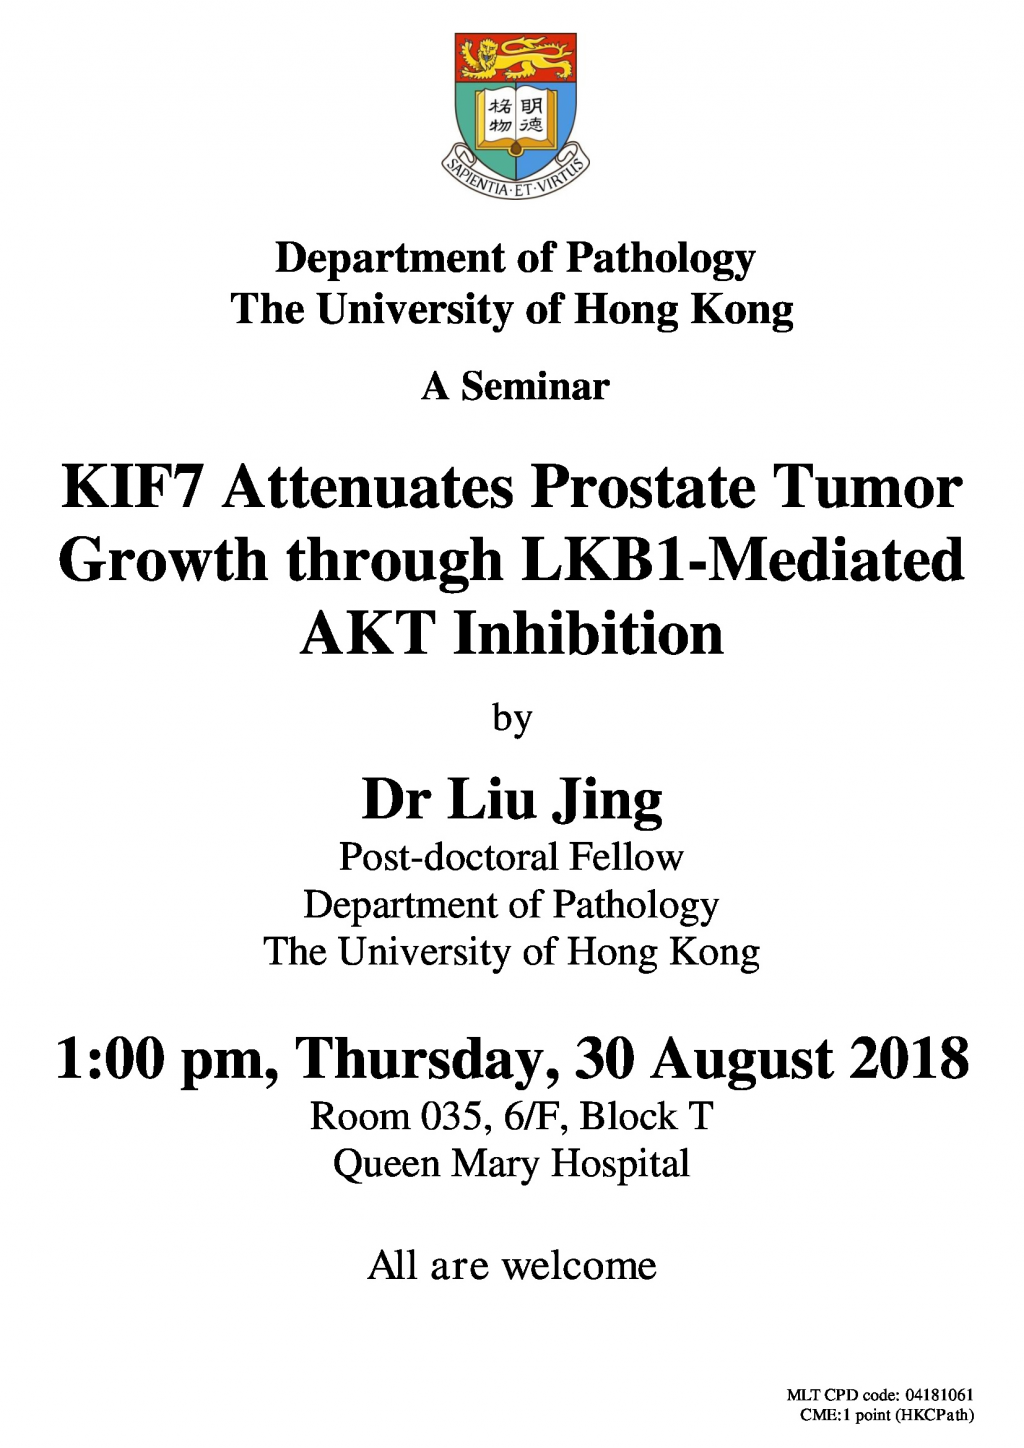 A Seminar on KIF7 Attenuates Prostate Tumor Growth through LKB1-Mediated AKT Inhibition